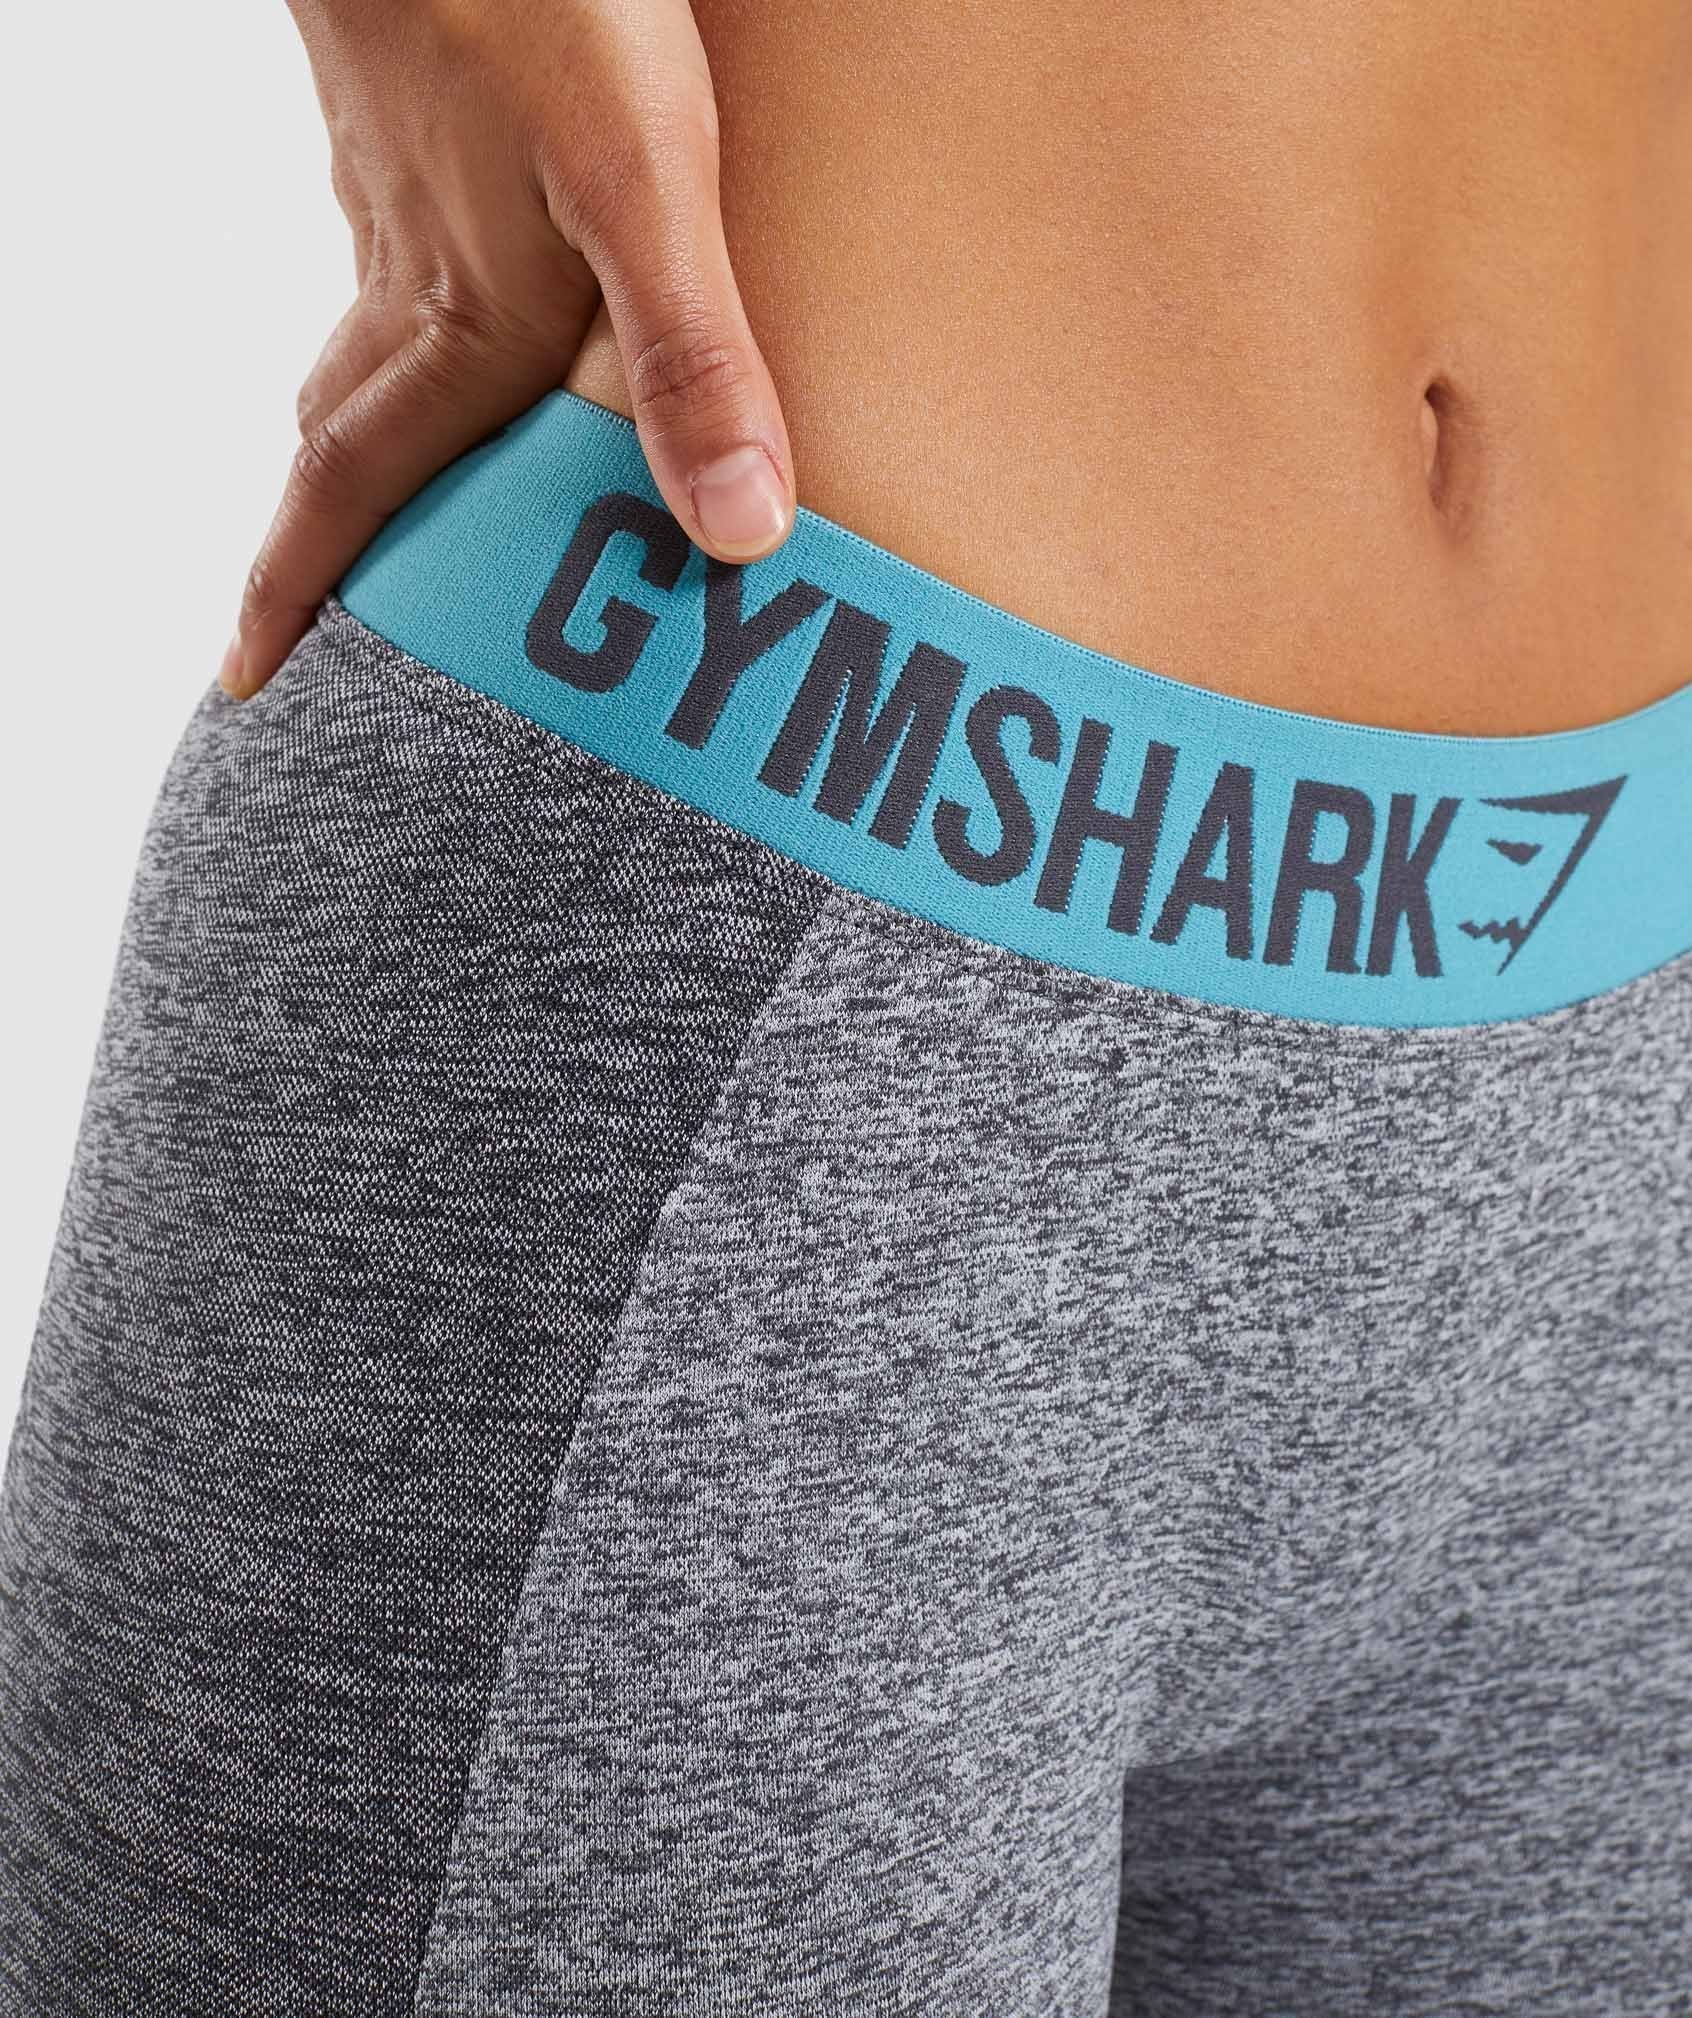 Gymshark Flex Leggings in Charcoal Marl/Dusky Teal SZ Small